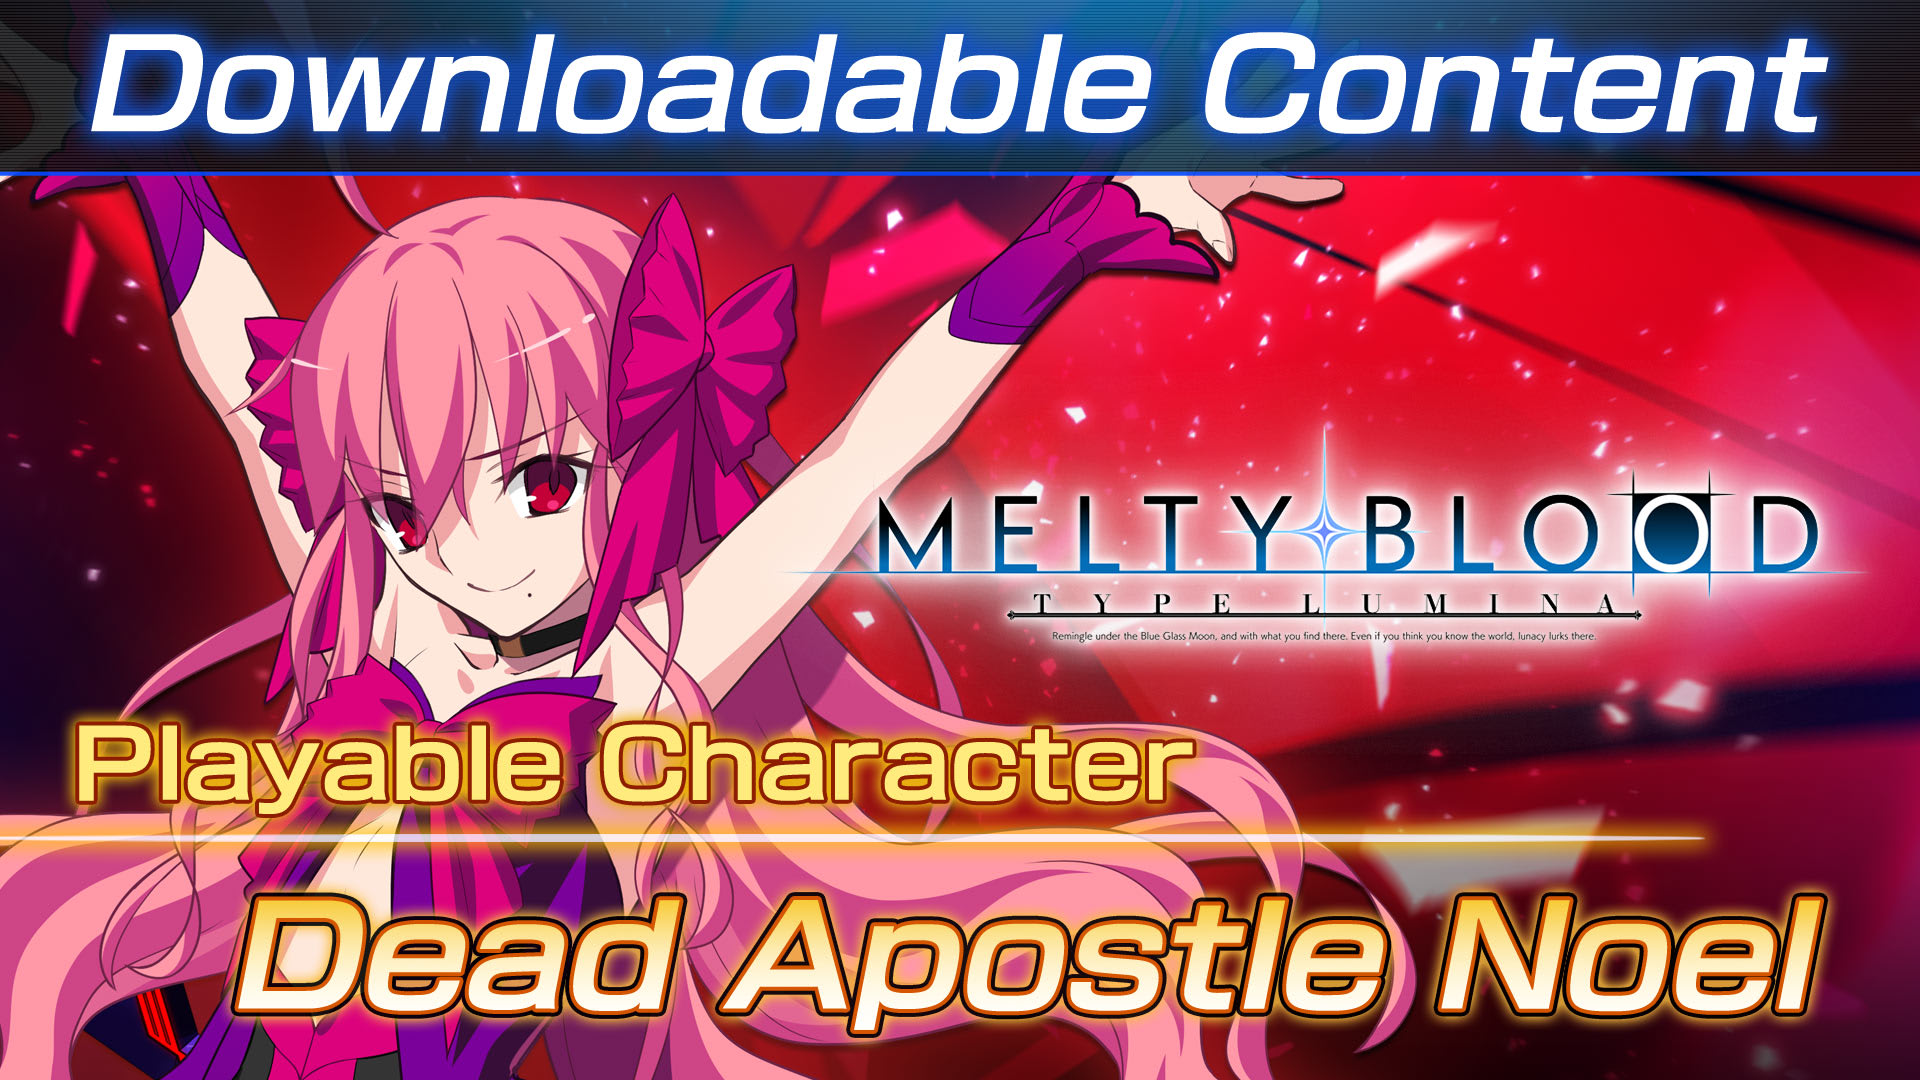 DLC: Playable Character - Dead Apostle Noel